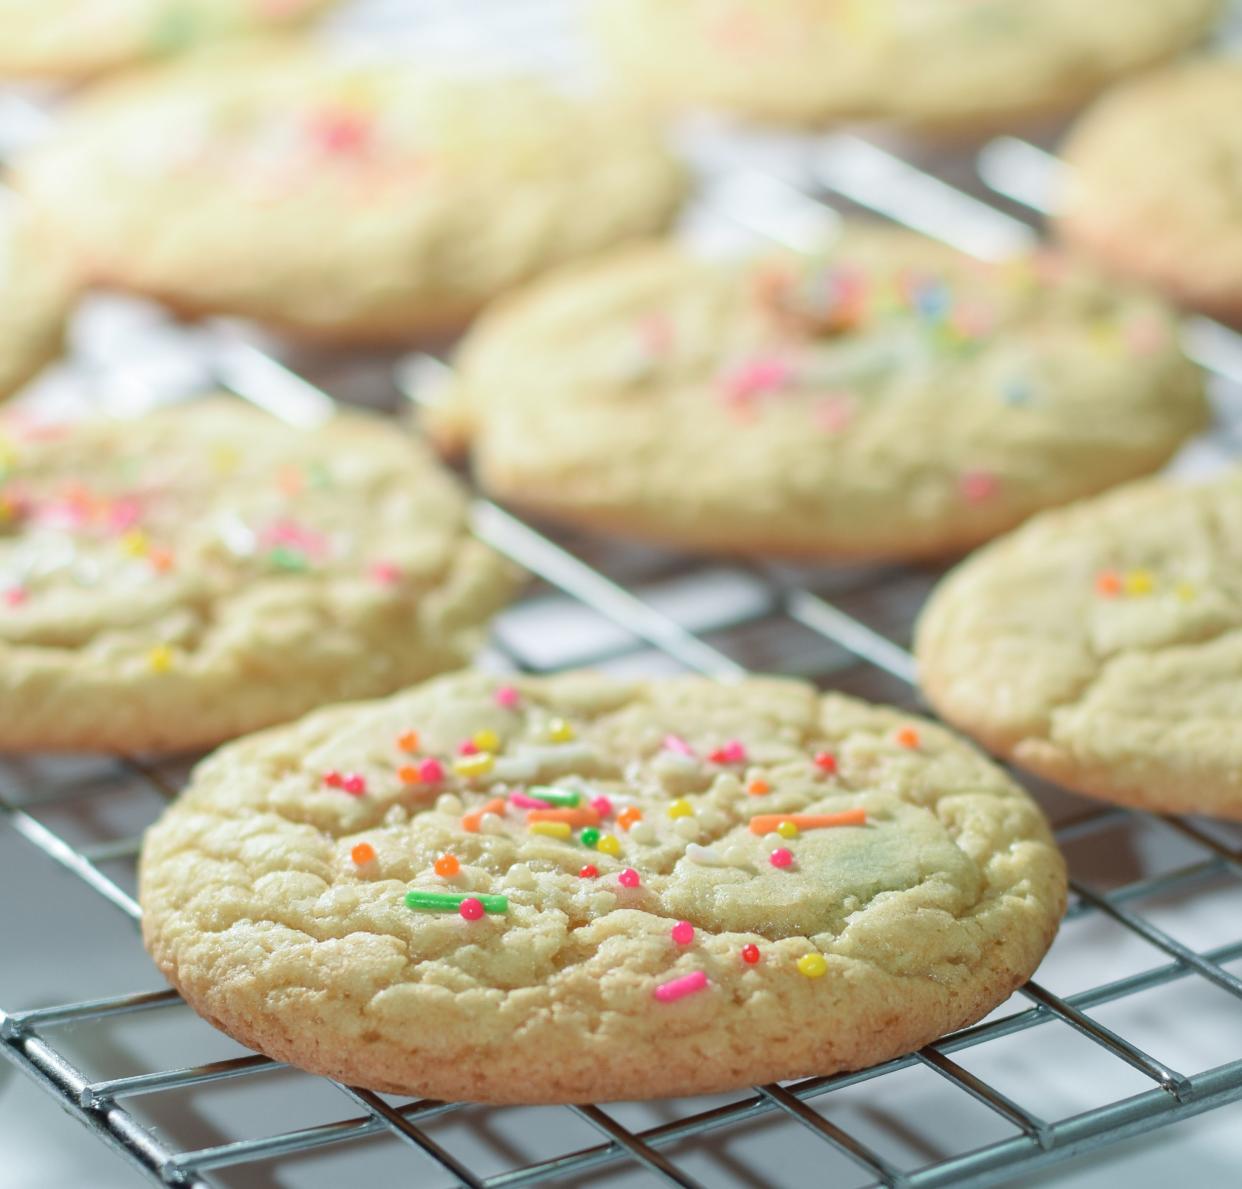 Freshly baked cookies on a rack with rainbow sprinkles.